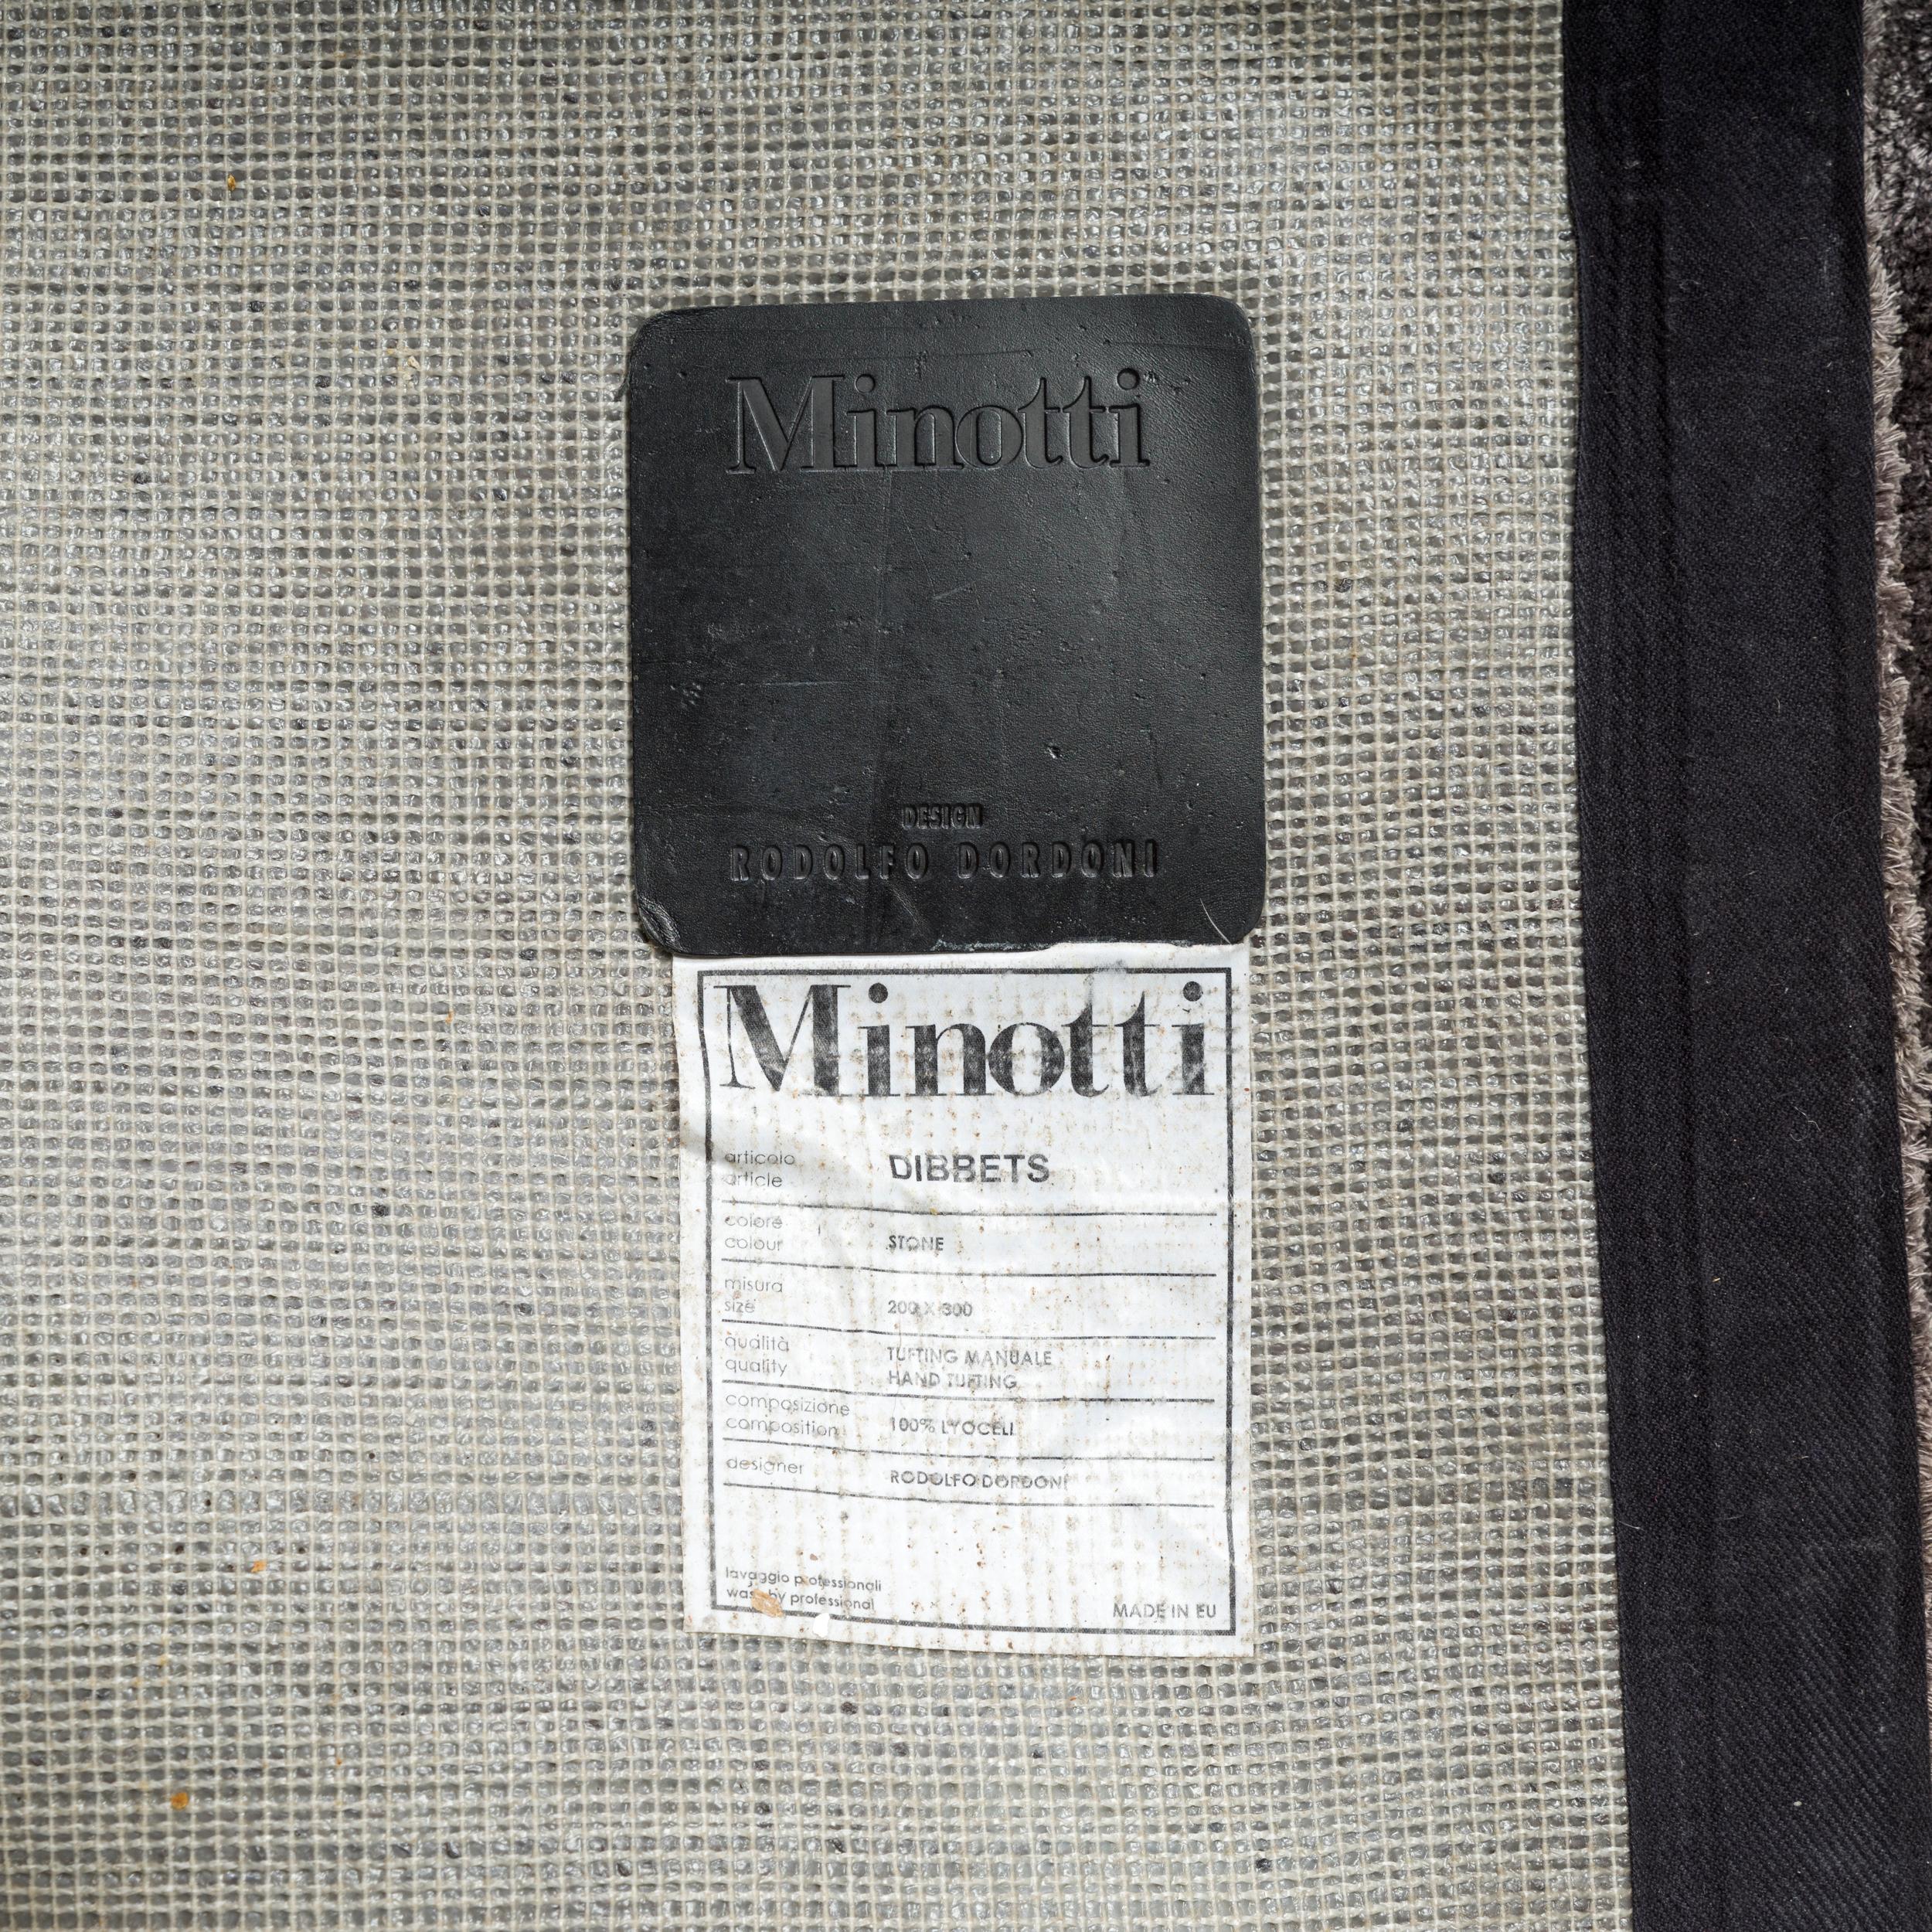 Rodolfo Dordoni for Minotti Grey Dibbets Rug, 300cm x 200cm In Good Condition For Sale In London, GB